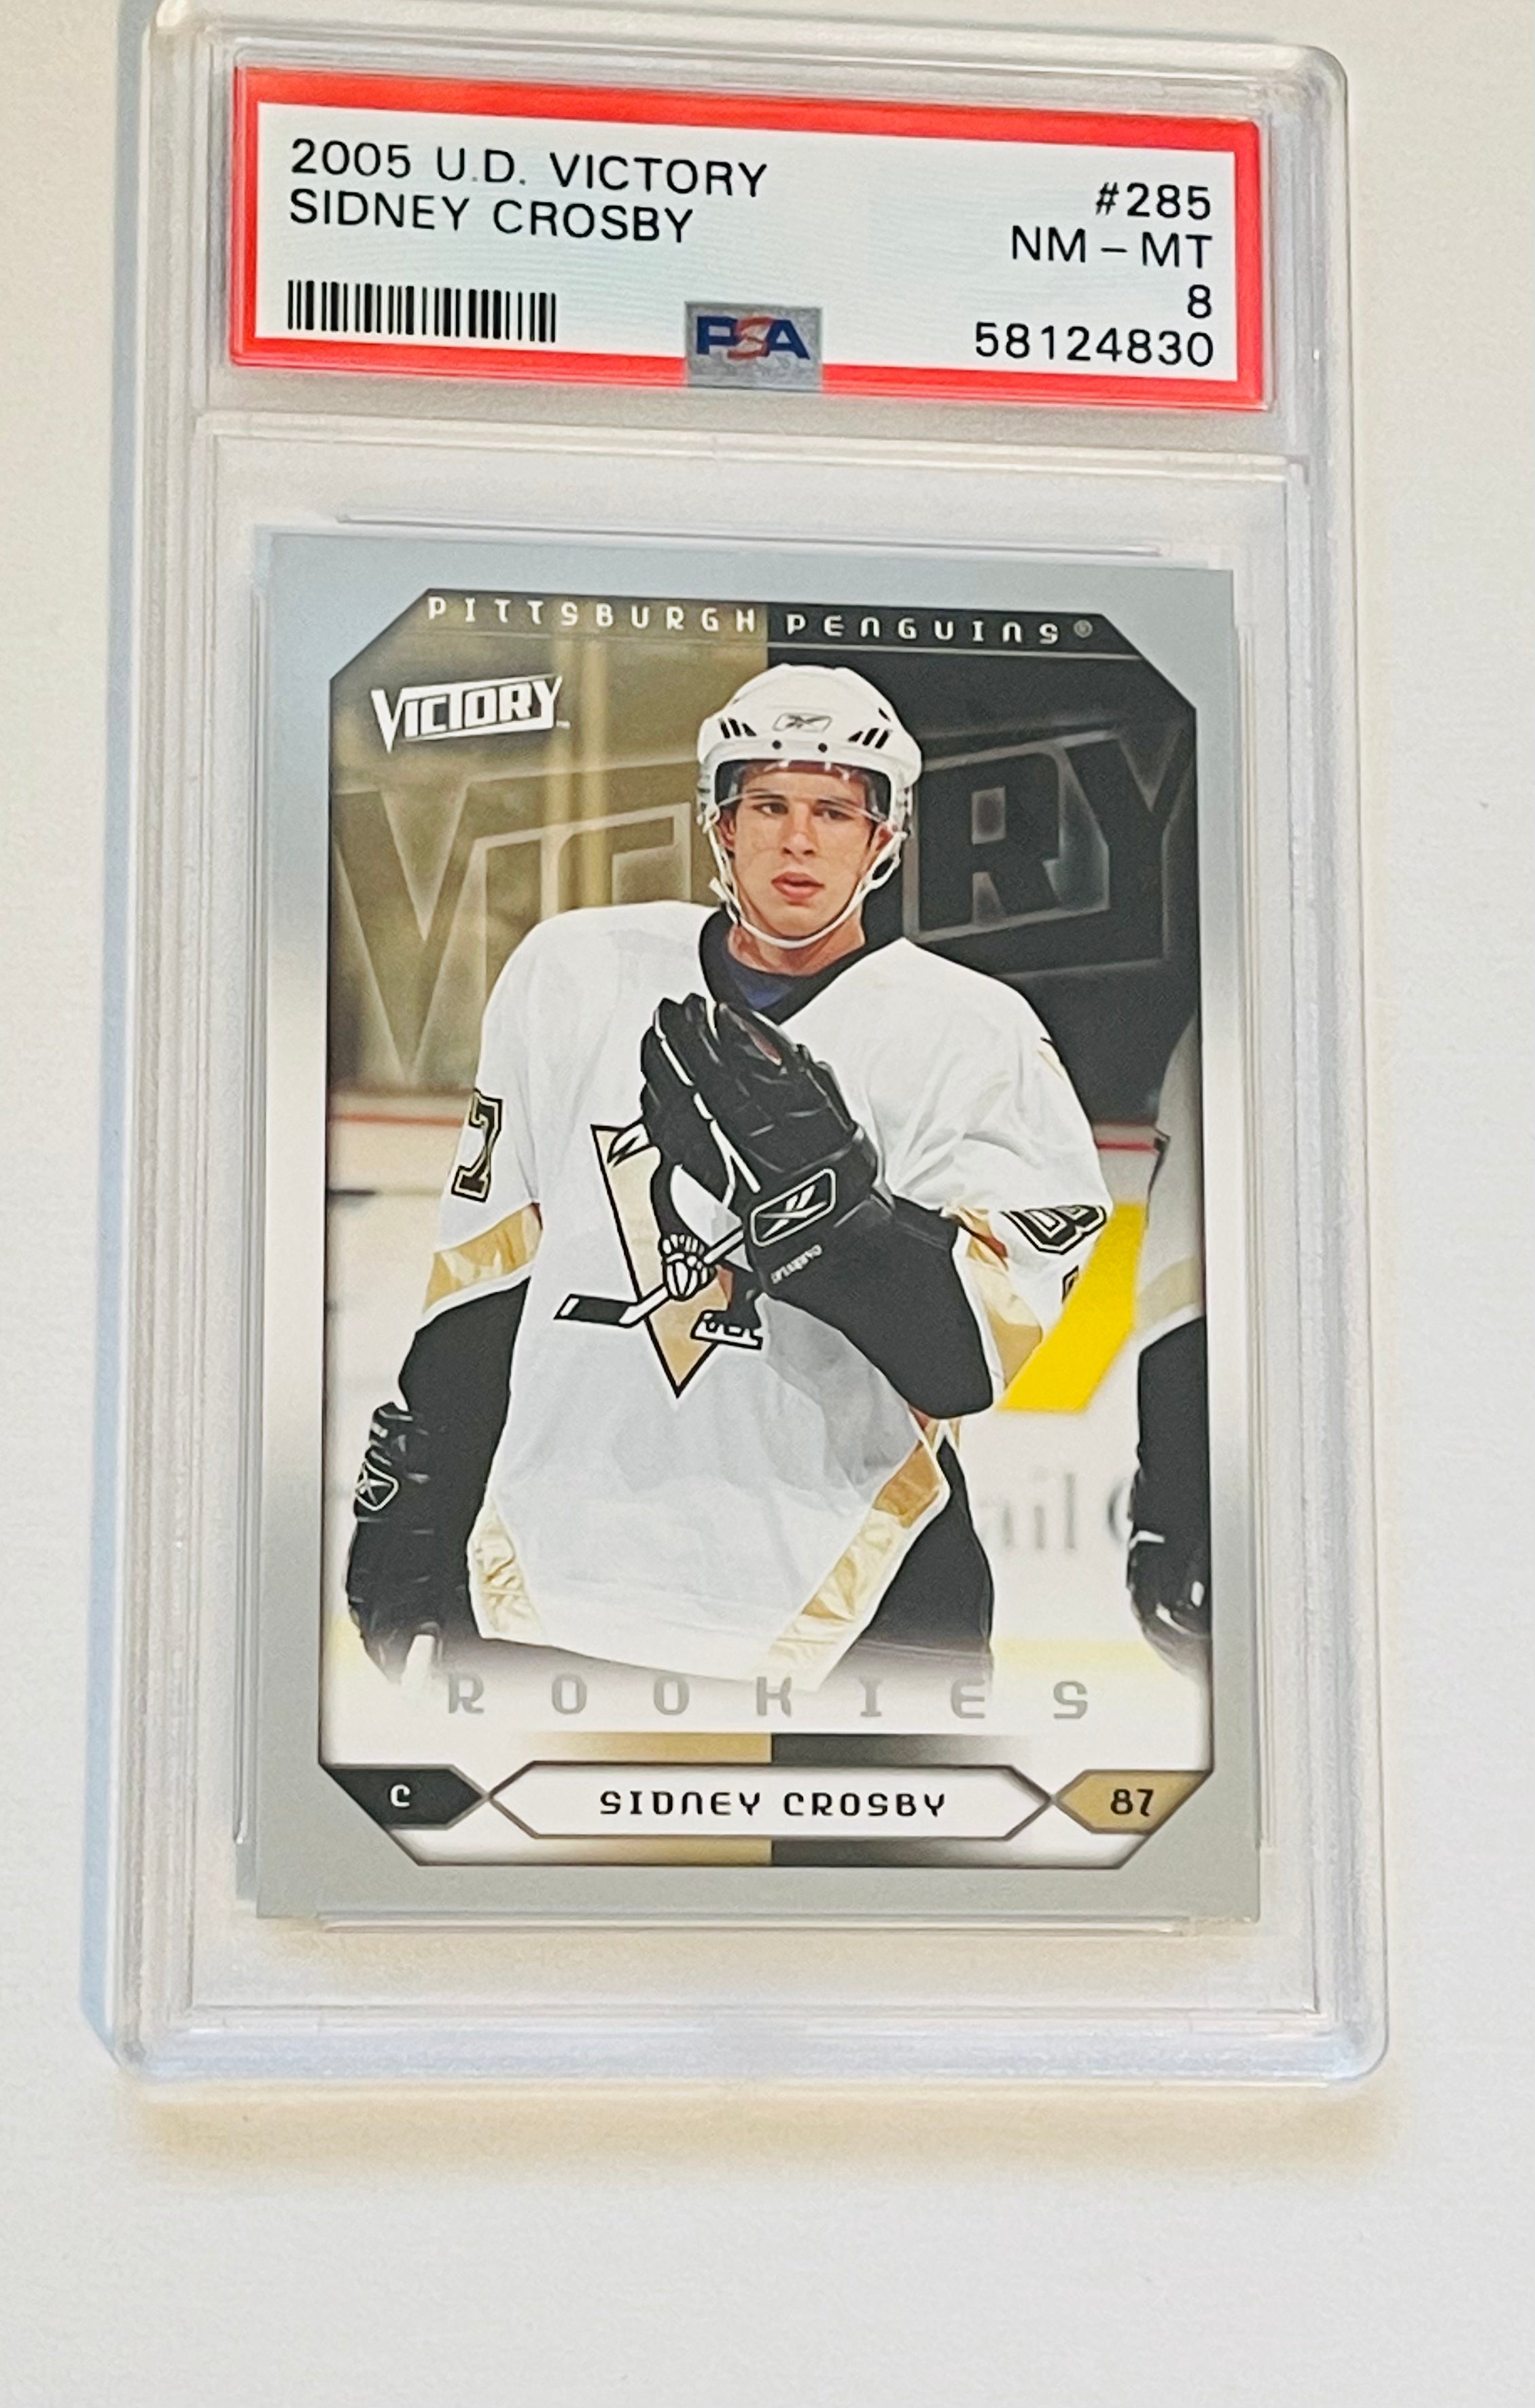 Sidney Crosby Upper Deck PSA 8 Victory high grade rookie hockey card 2005